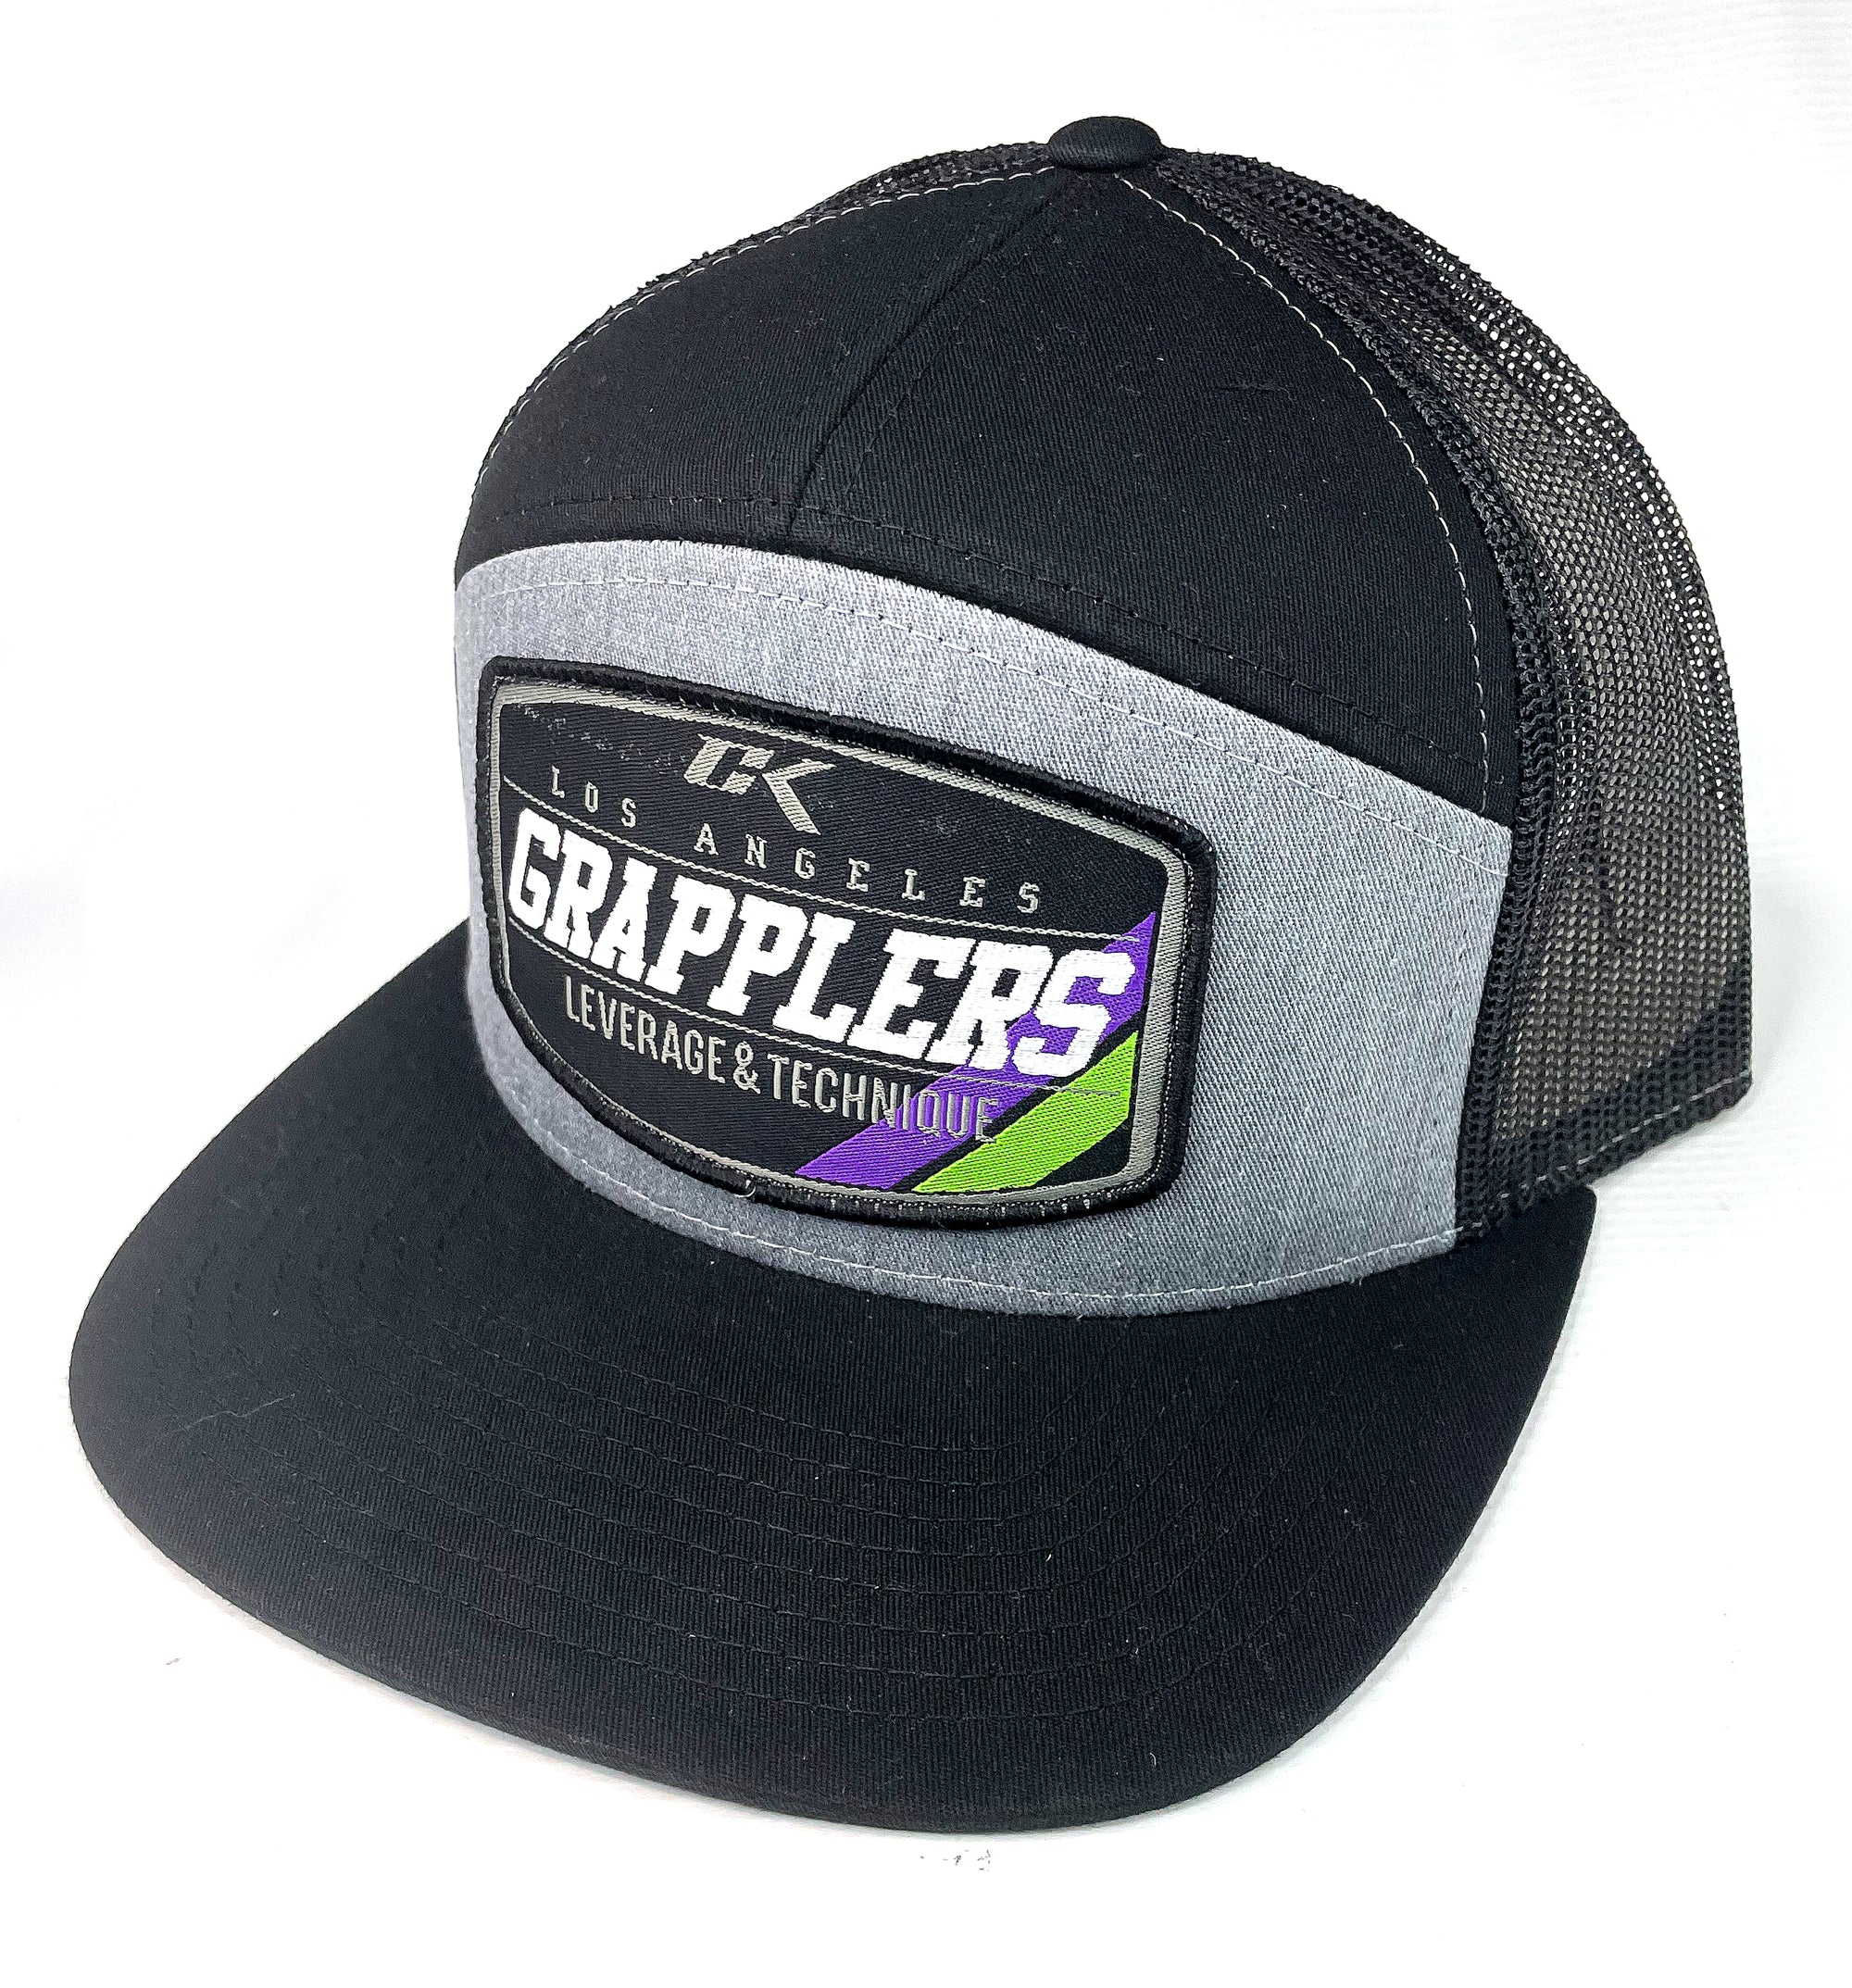 NEW CK FIGHTLIFE  7-PANEL CAP "GRAPPLERS"